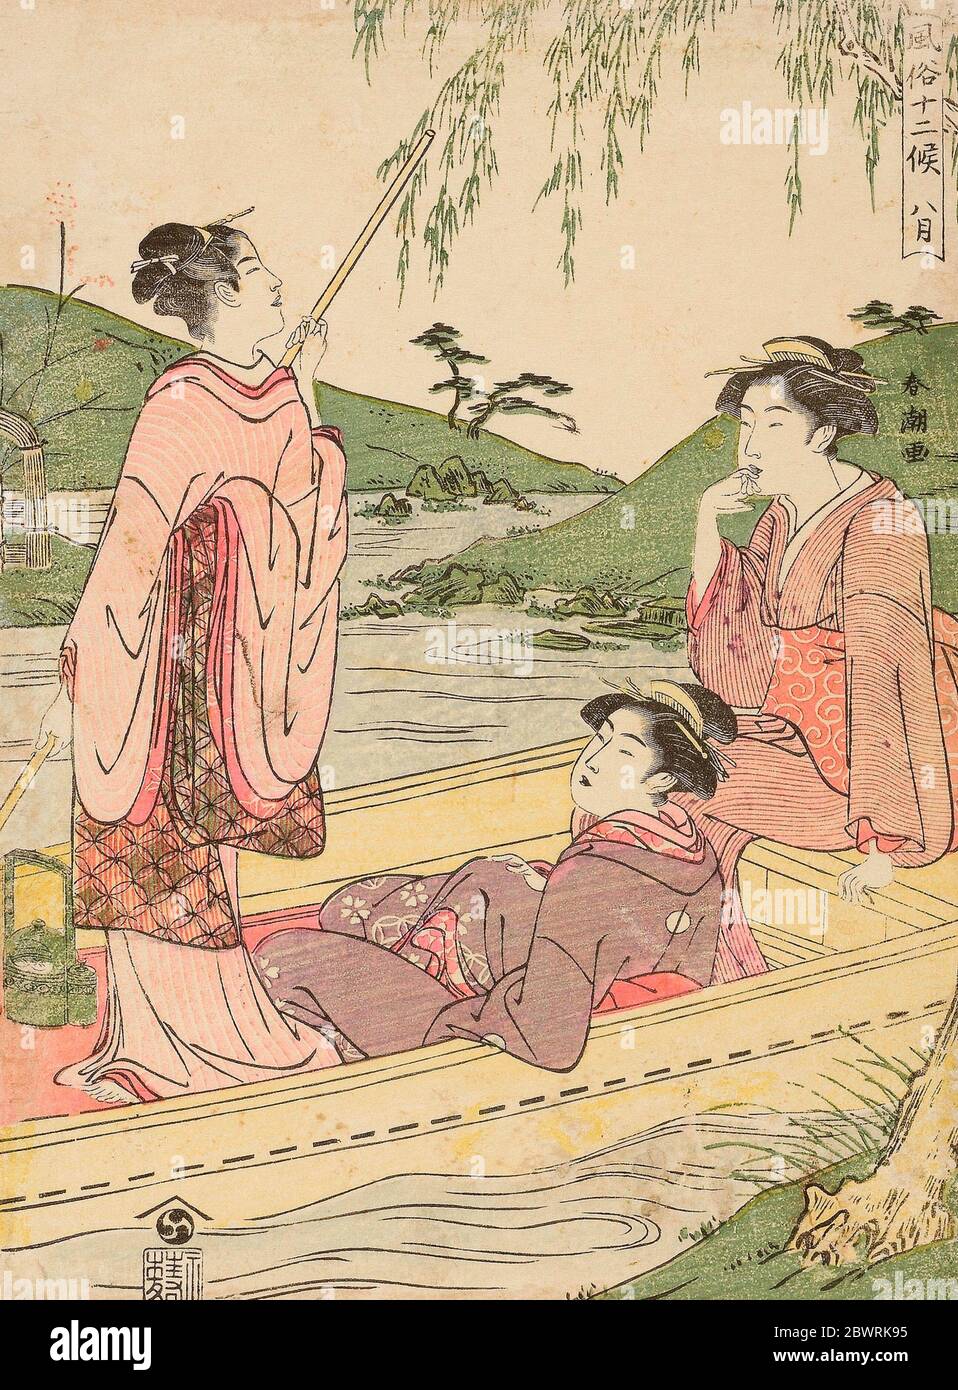 Author: Katsukawa Shunch. The Eighth Month (Hachigatsu), from the series 'Popular Customs of the Twelve Months (Fuzoku juni ko)' - c. 1780/1801 - Stock Photo